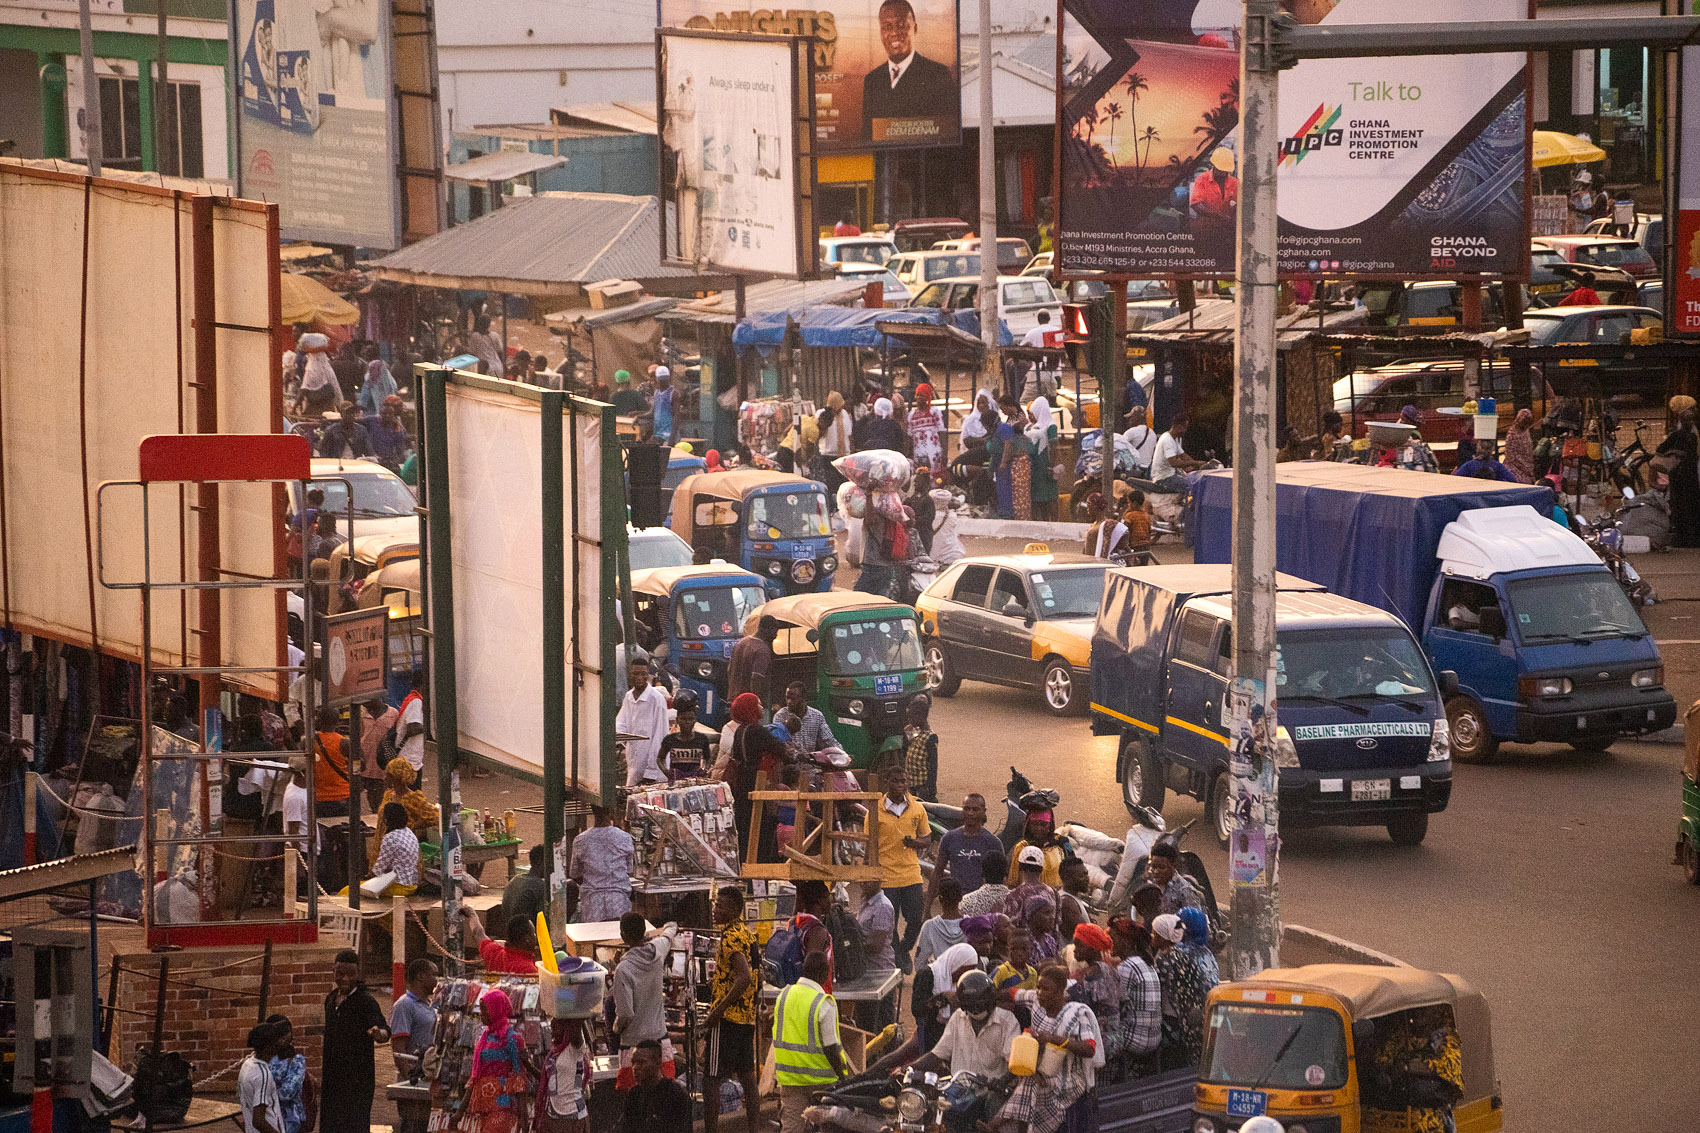 Verkehrsknotenpunkt Tamale in Ghana